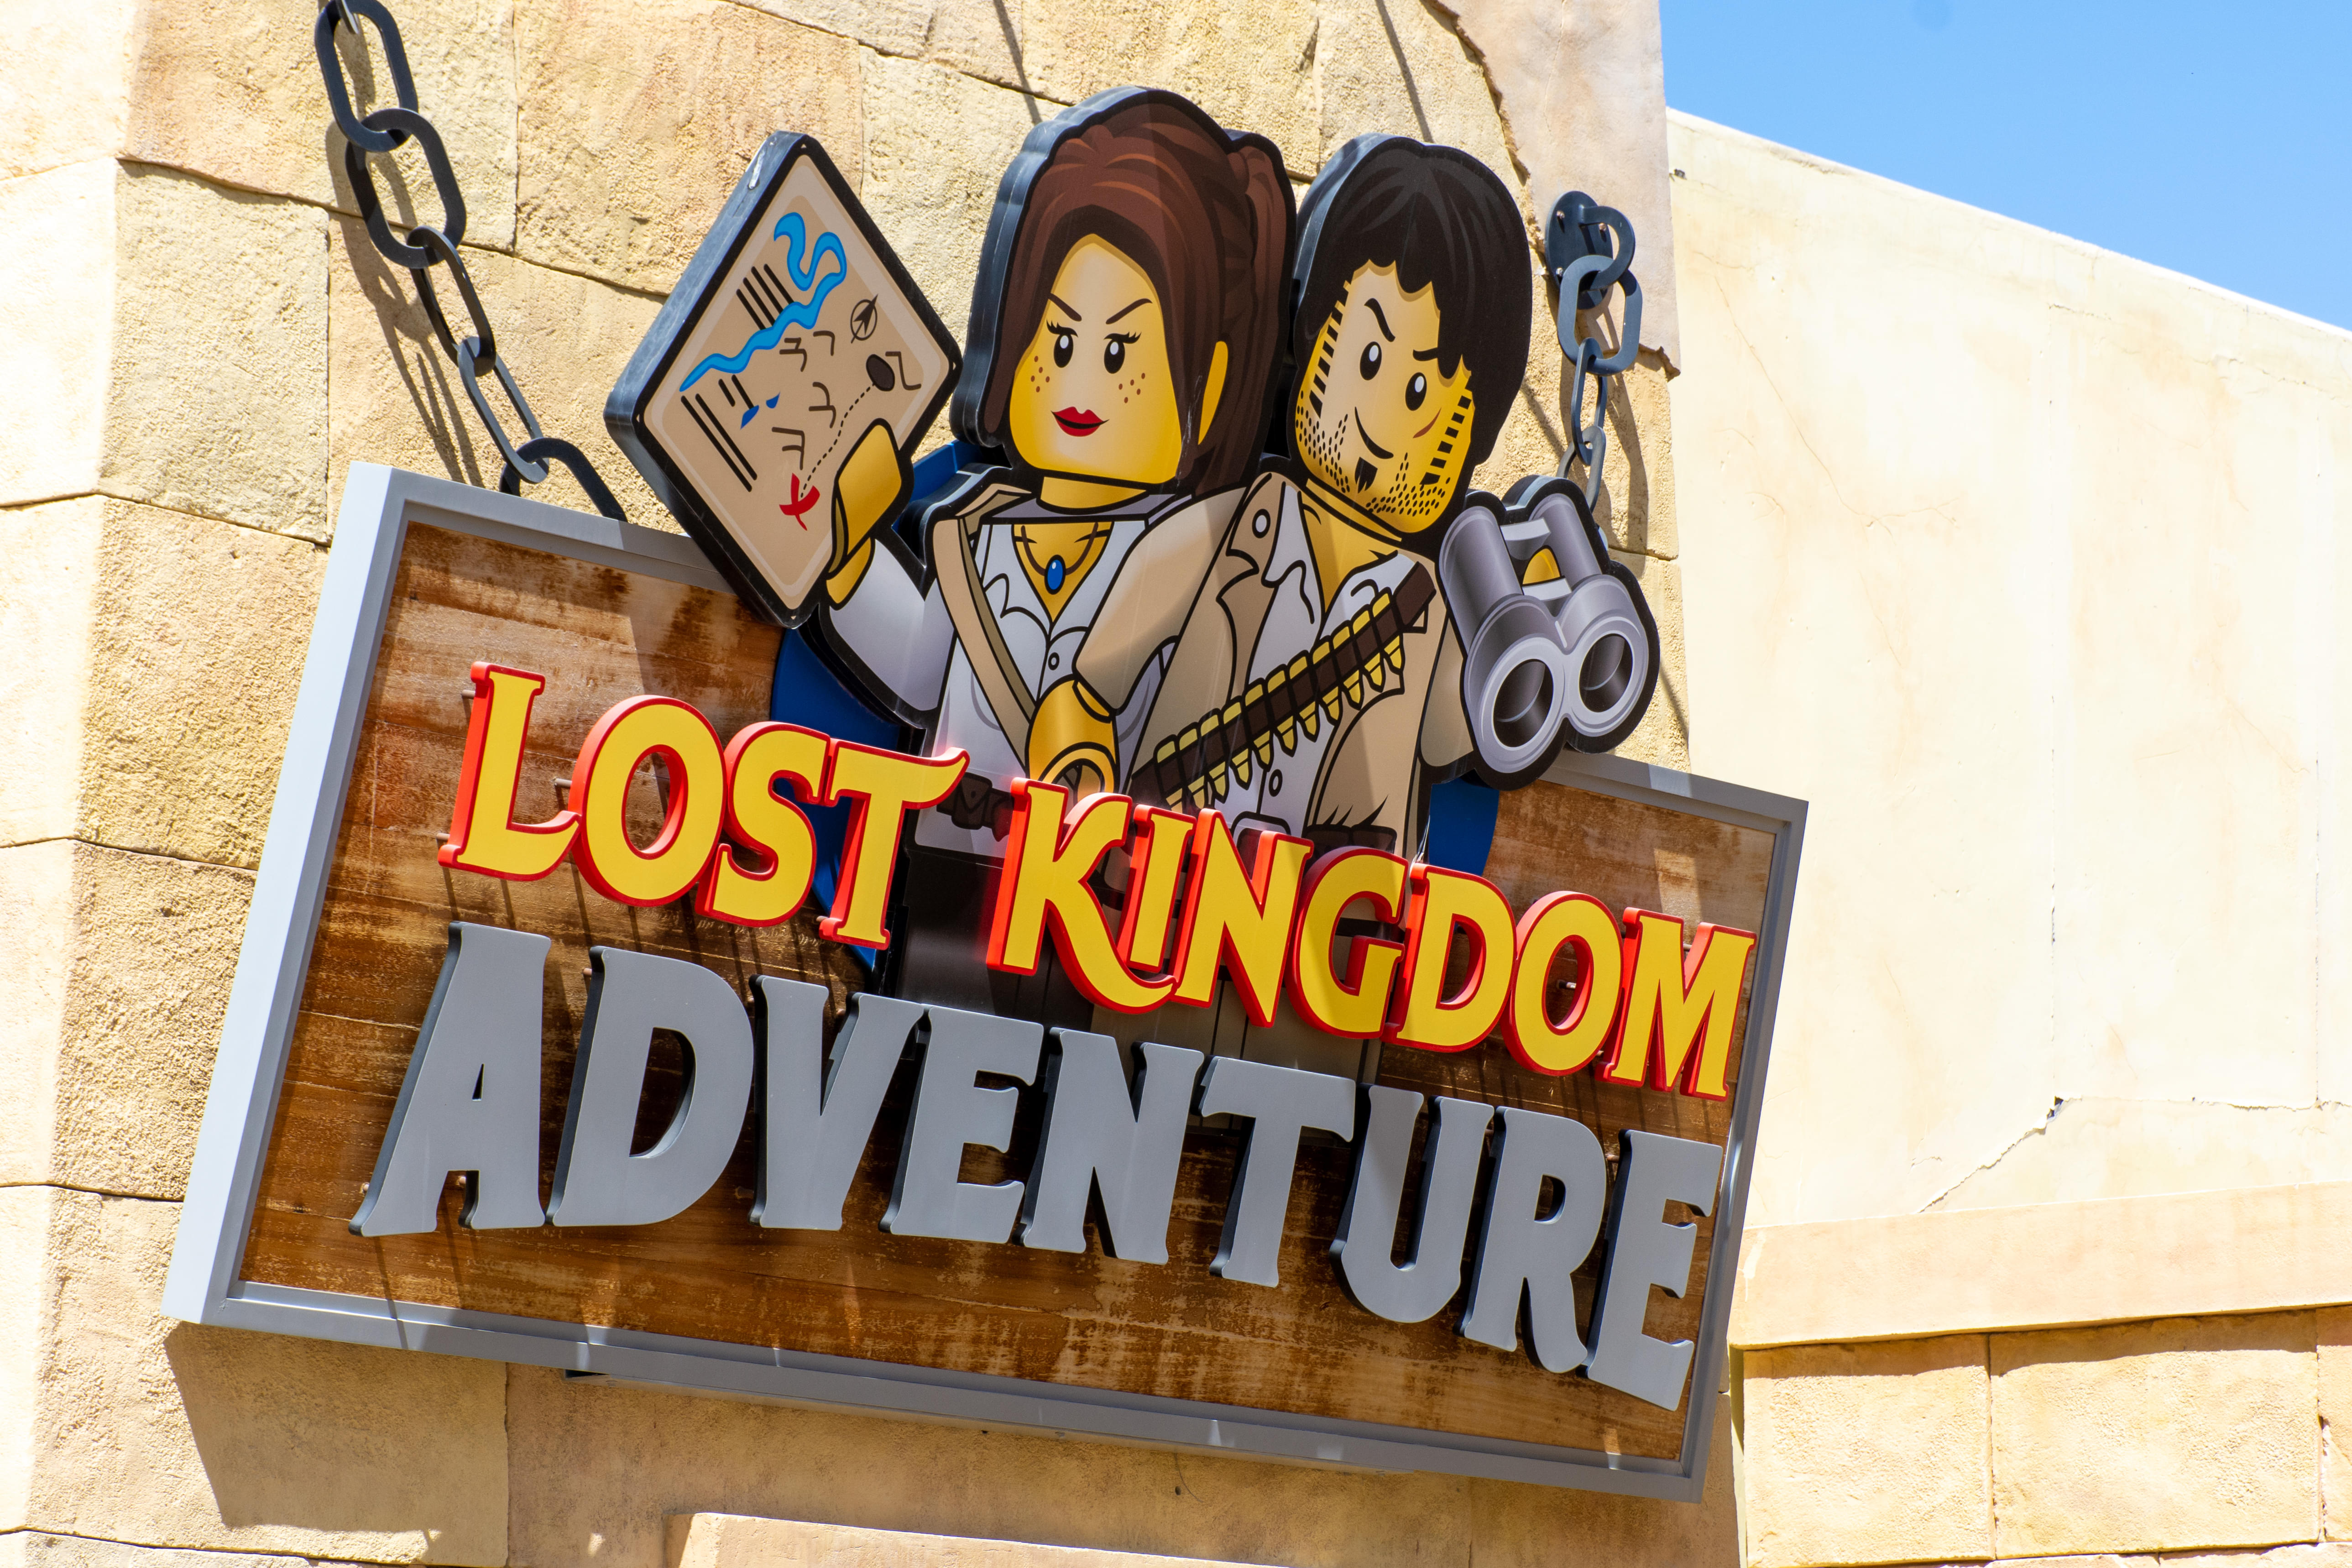 Lost Kingdom Adventure